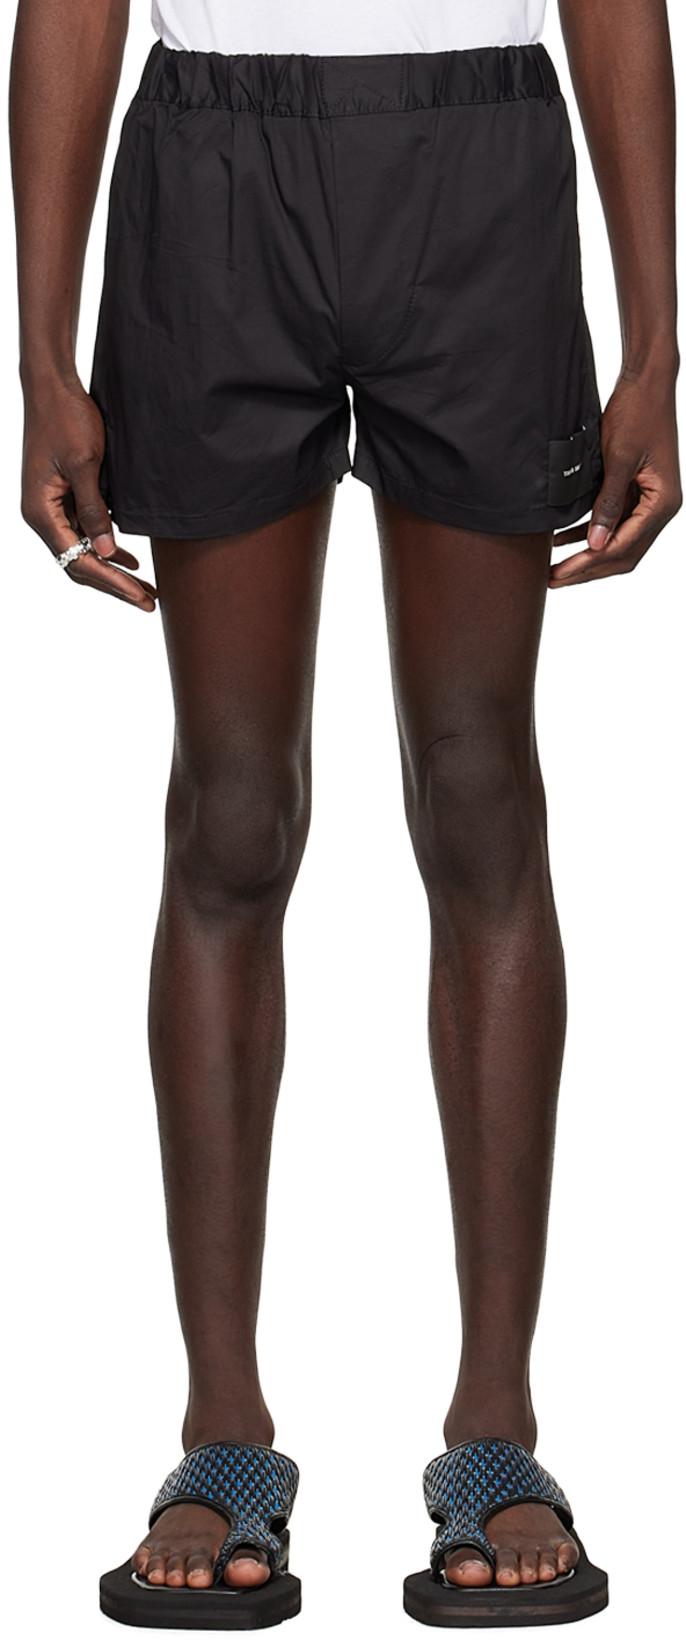 SSENSE Exclusive Black Cotton Shorts by TOKYO JAMES